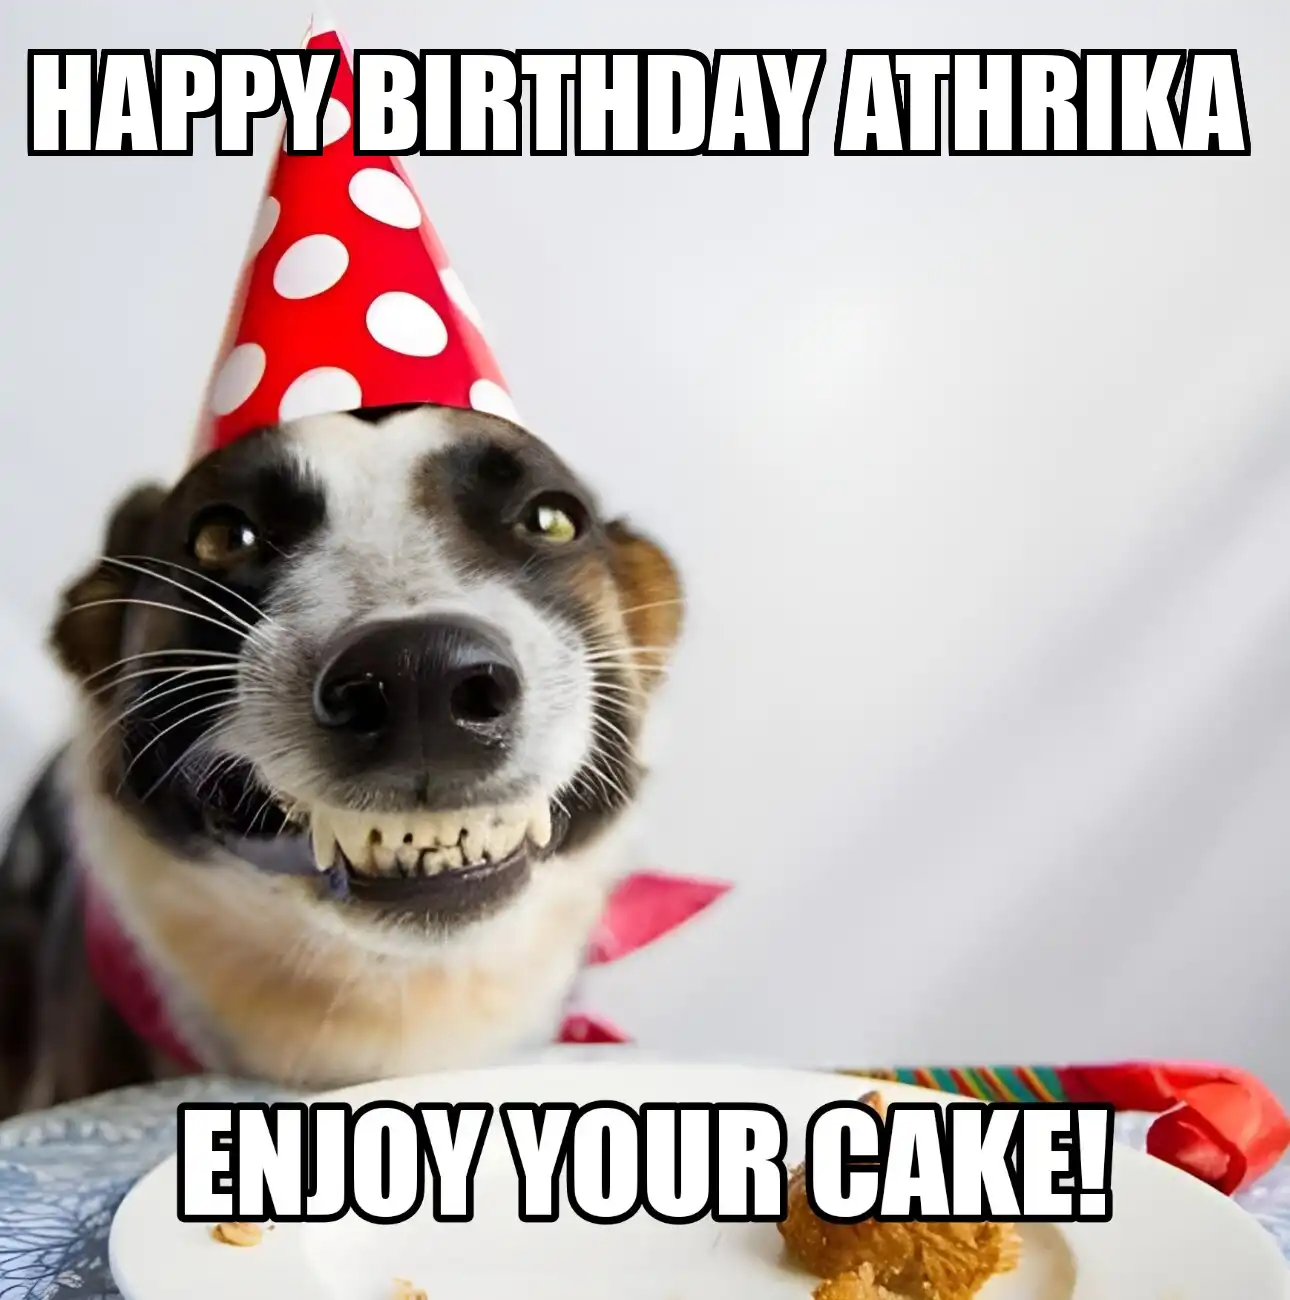 Happy Birthday Athrika Enjoy Your Cake Dog Meme